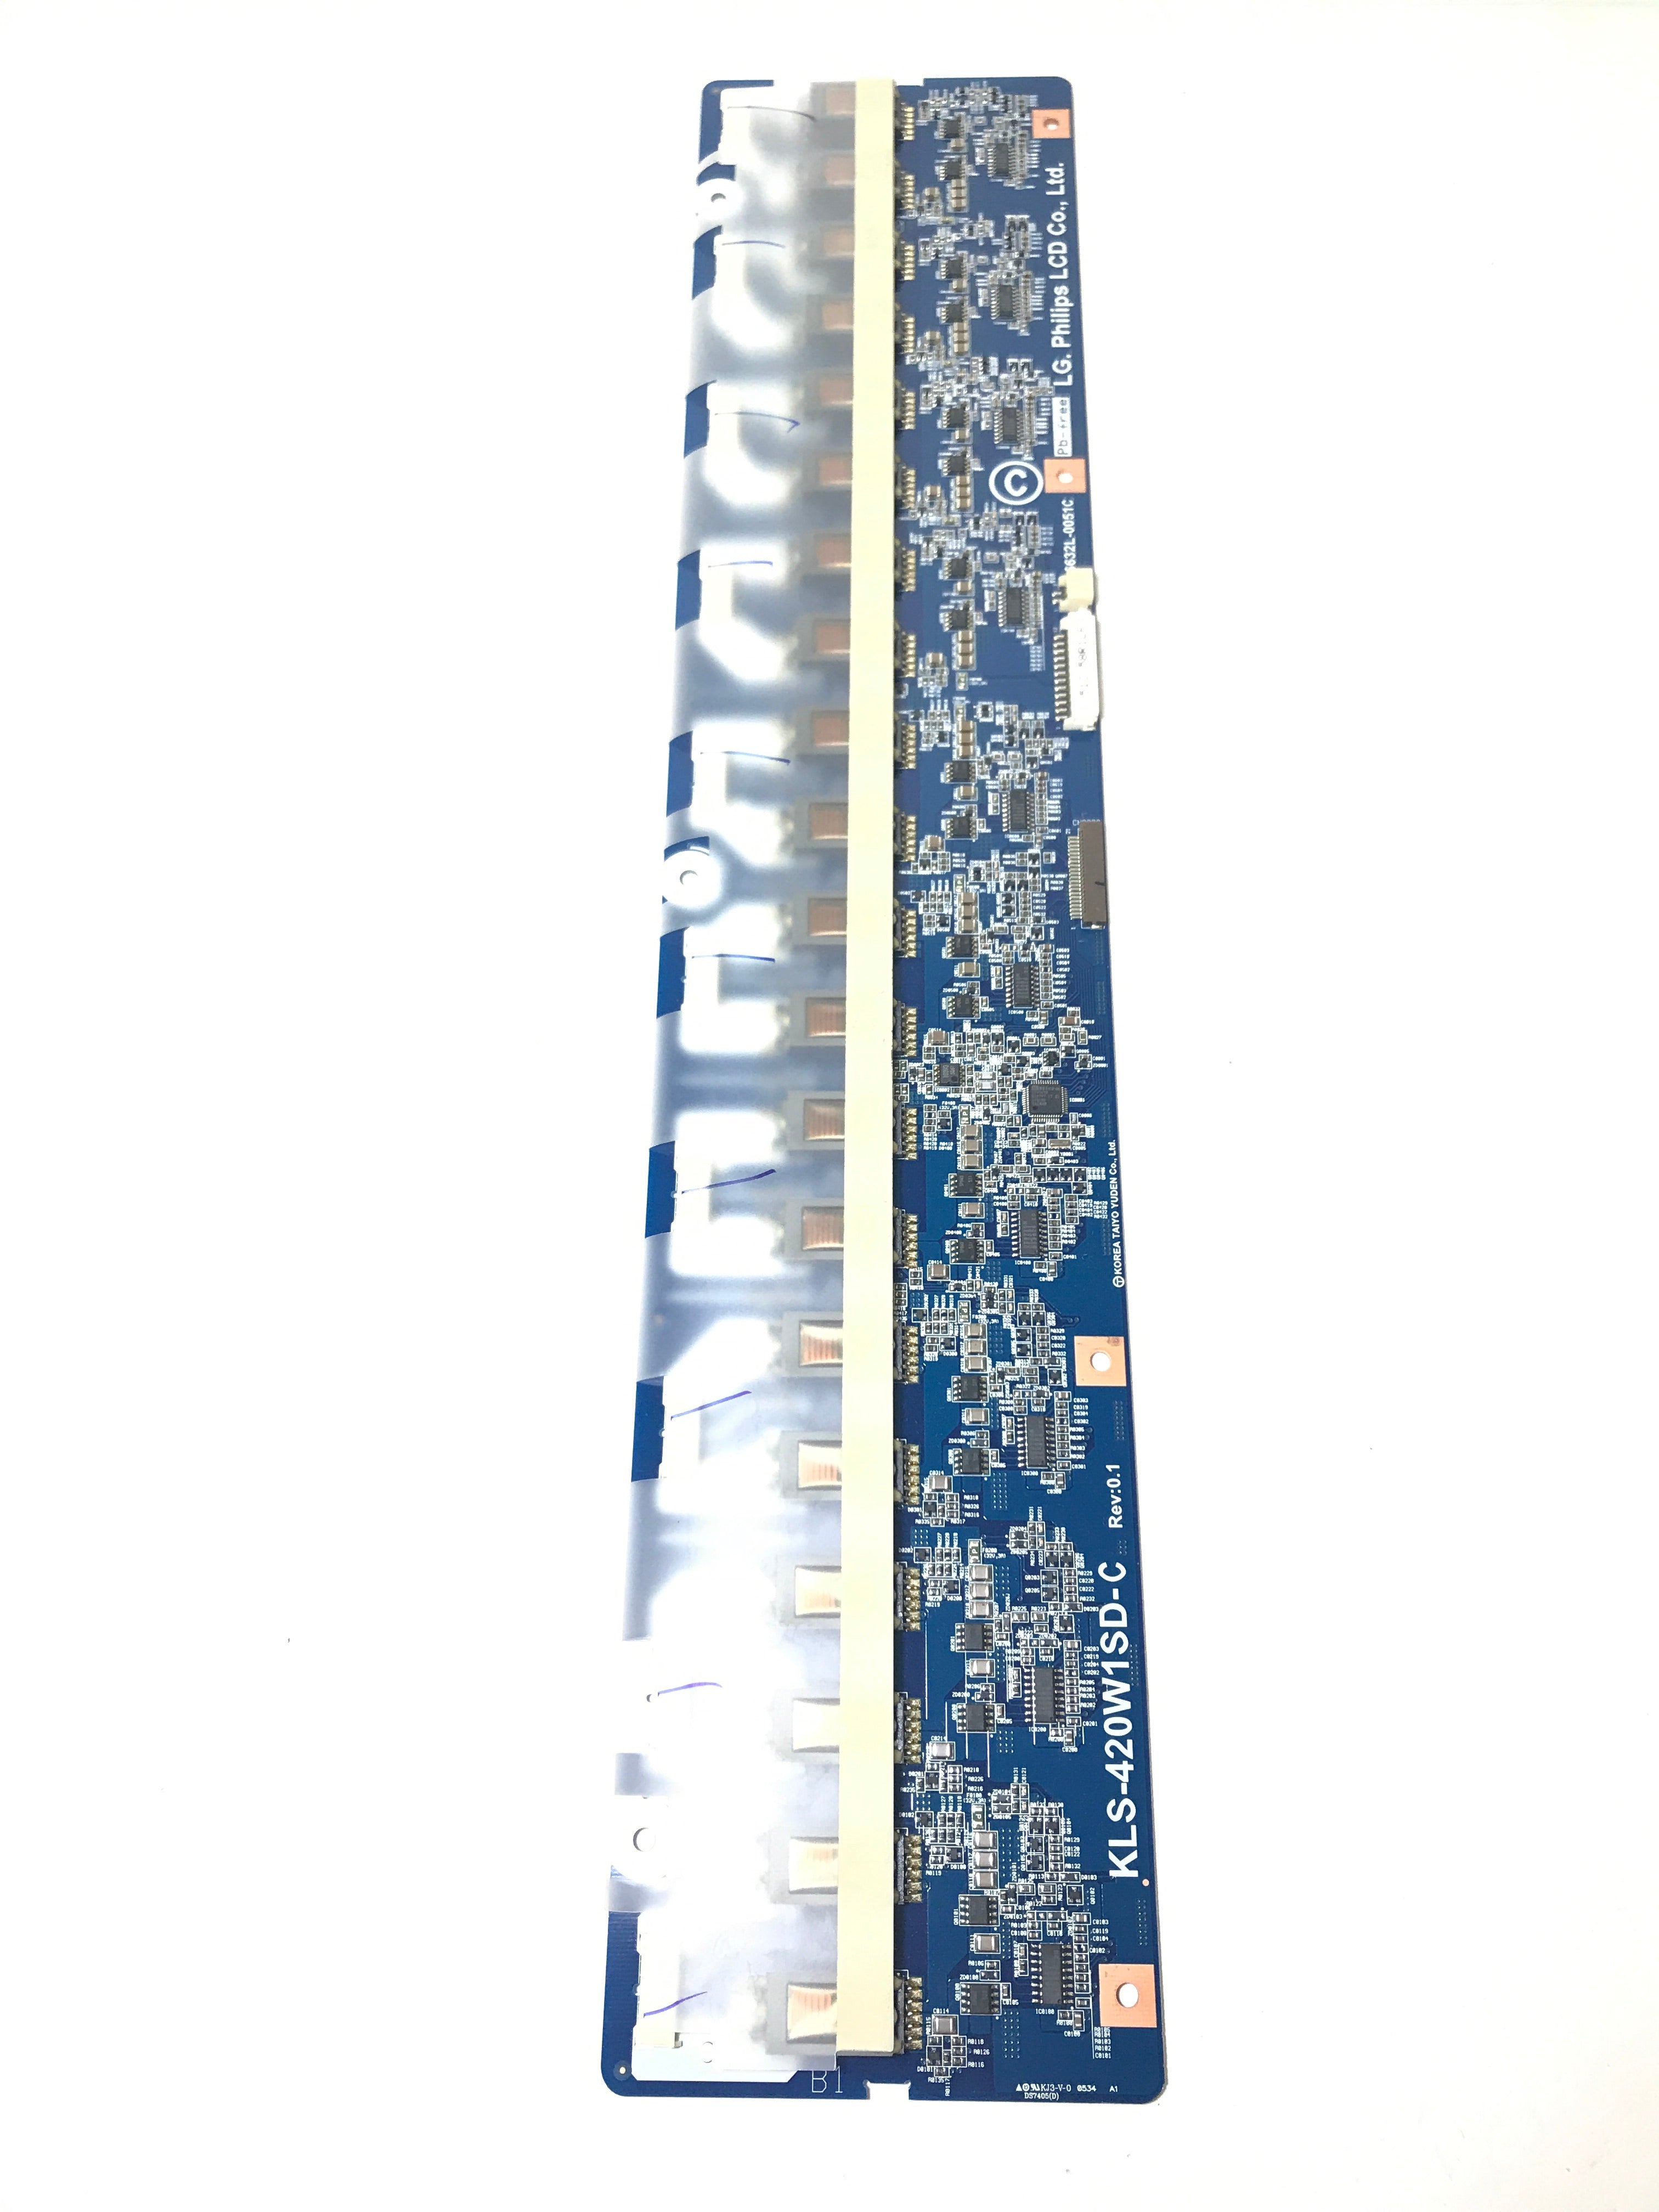 LG EAY40322601 (6632L-0051C, KLS-420W1SD-C) Backlight Inverter